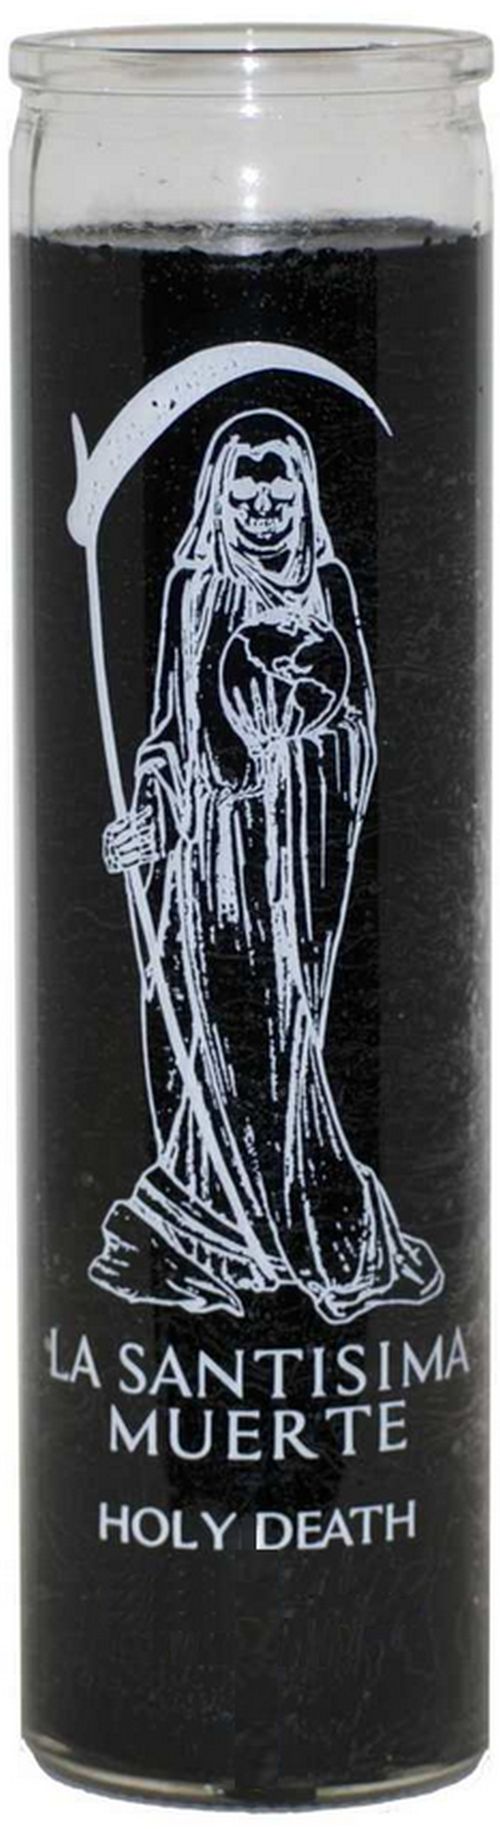 St. Muerte - Holy Death (Black)